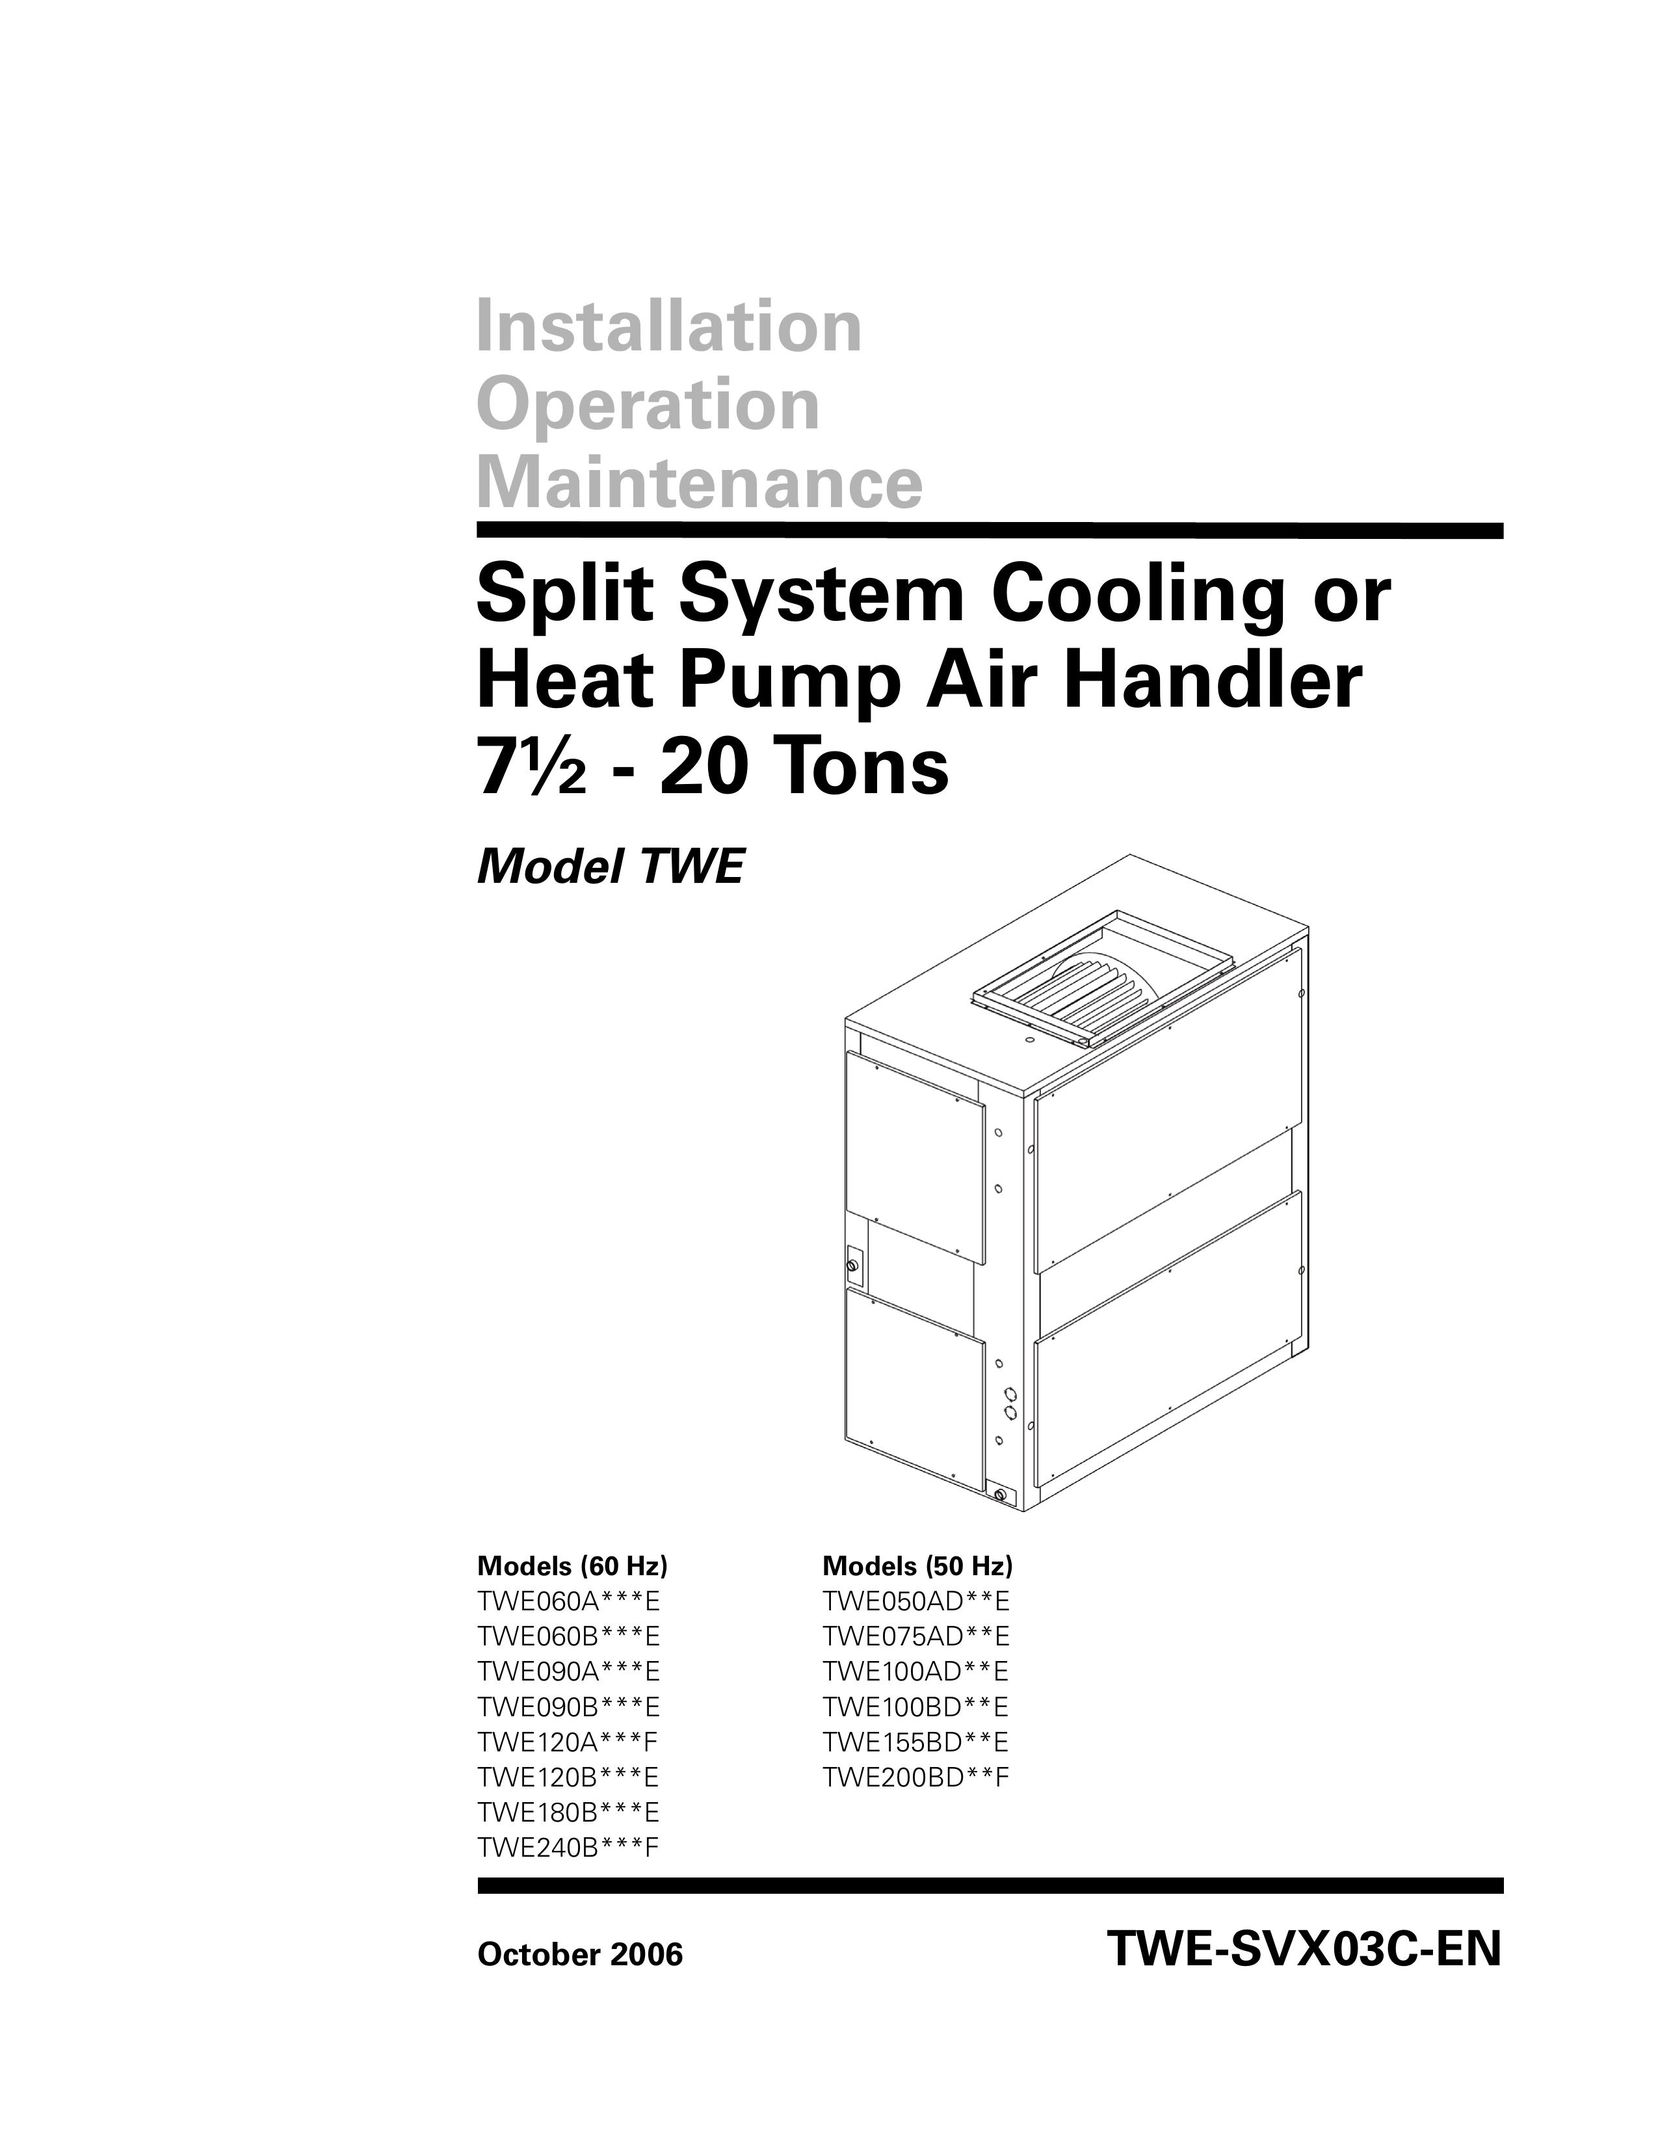 American Standard TWE180B***E Heat Pump User Manual